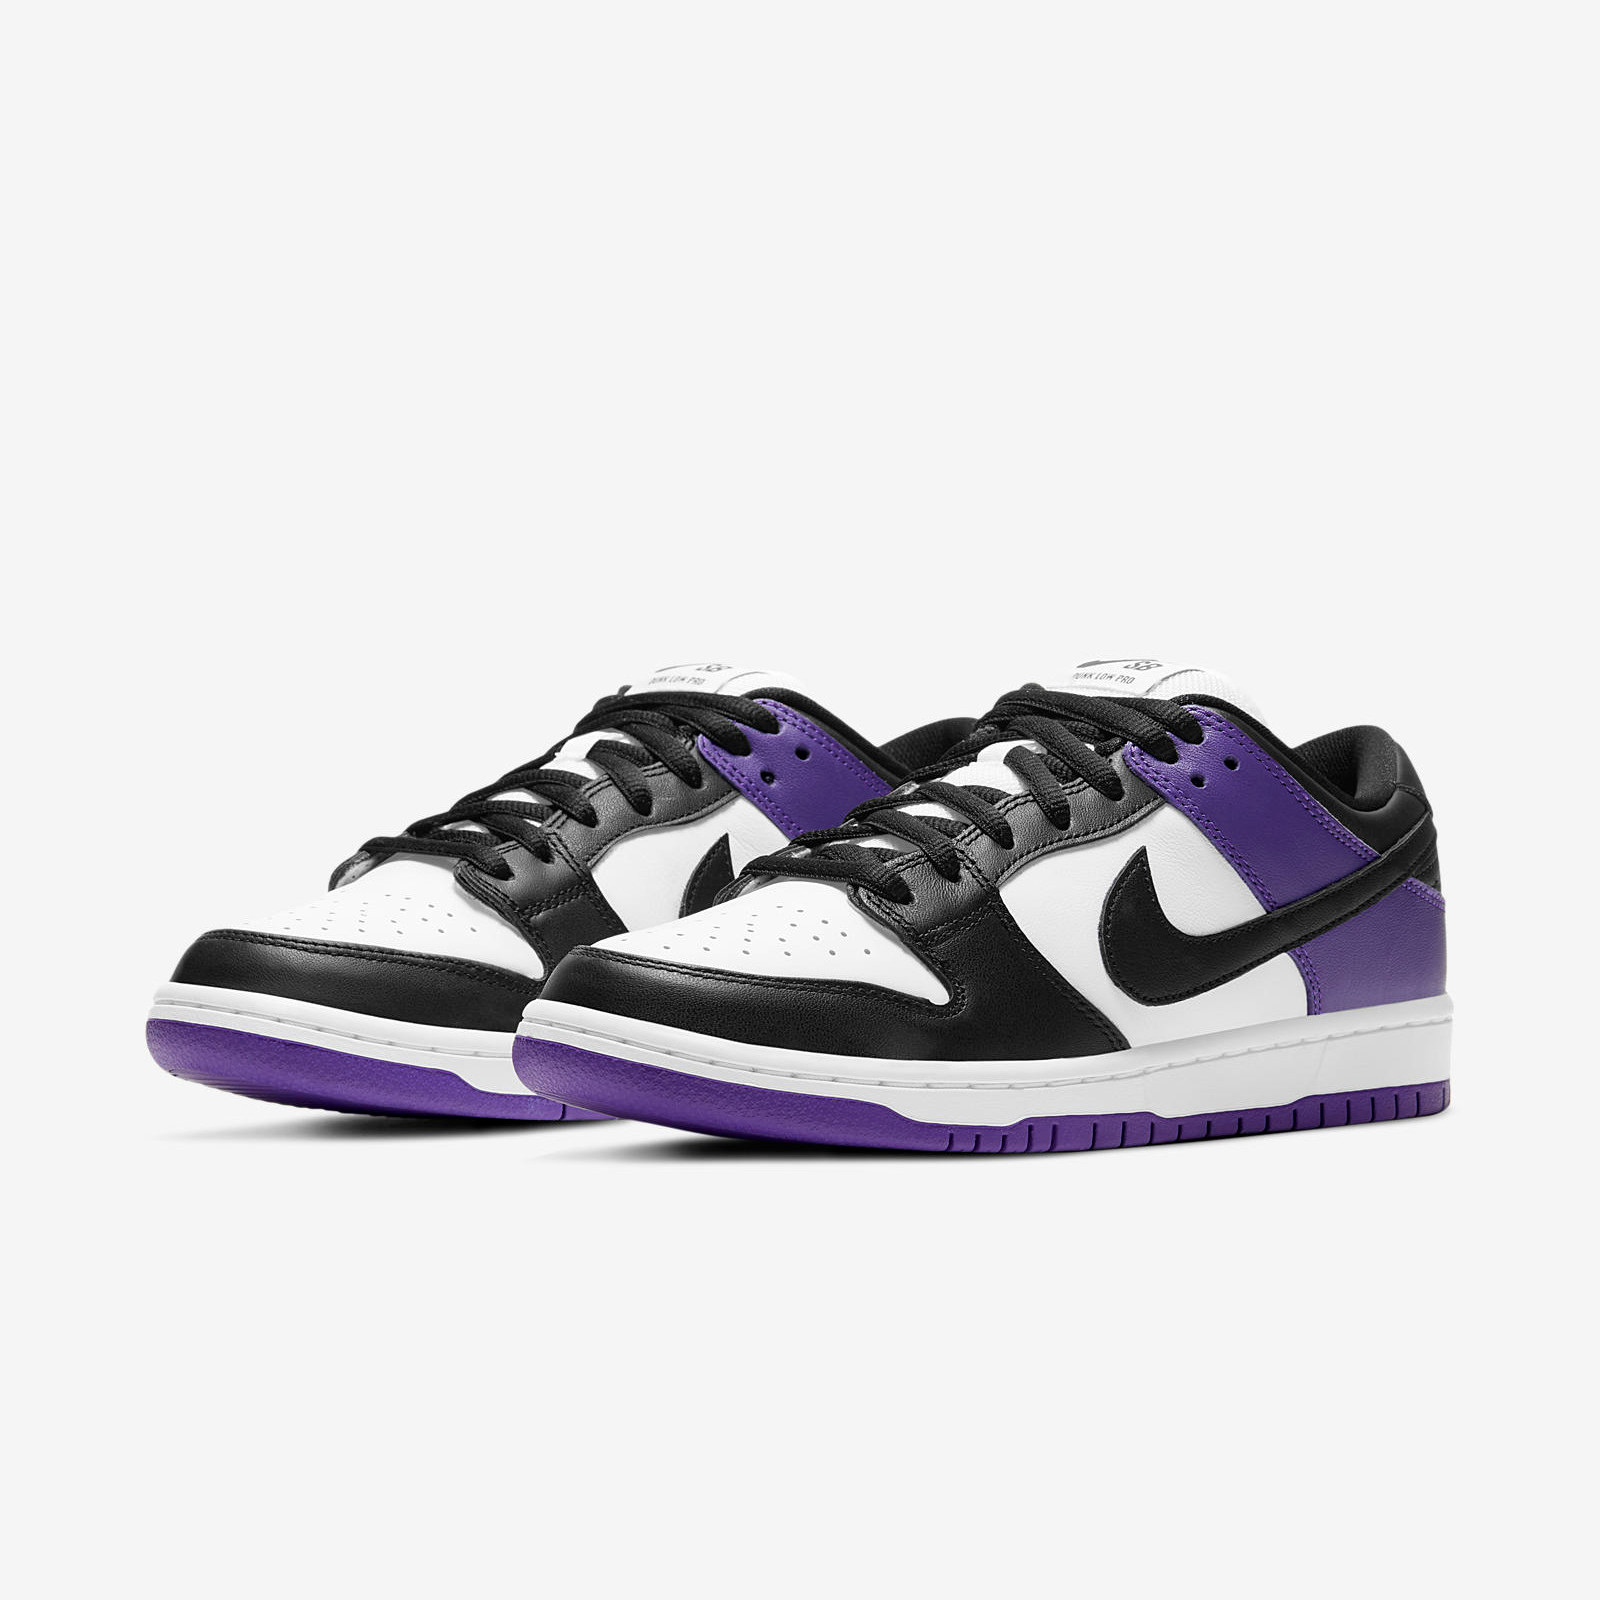 Nike SB Dunk Low
« Court Purple »